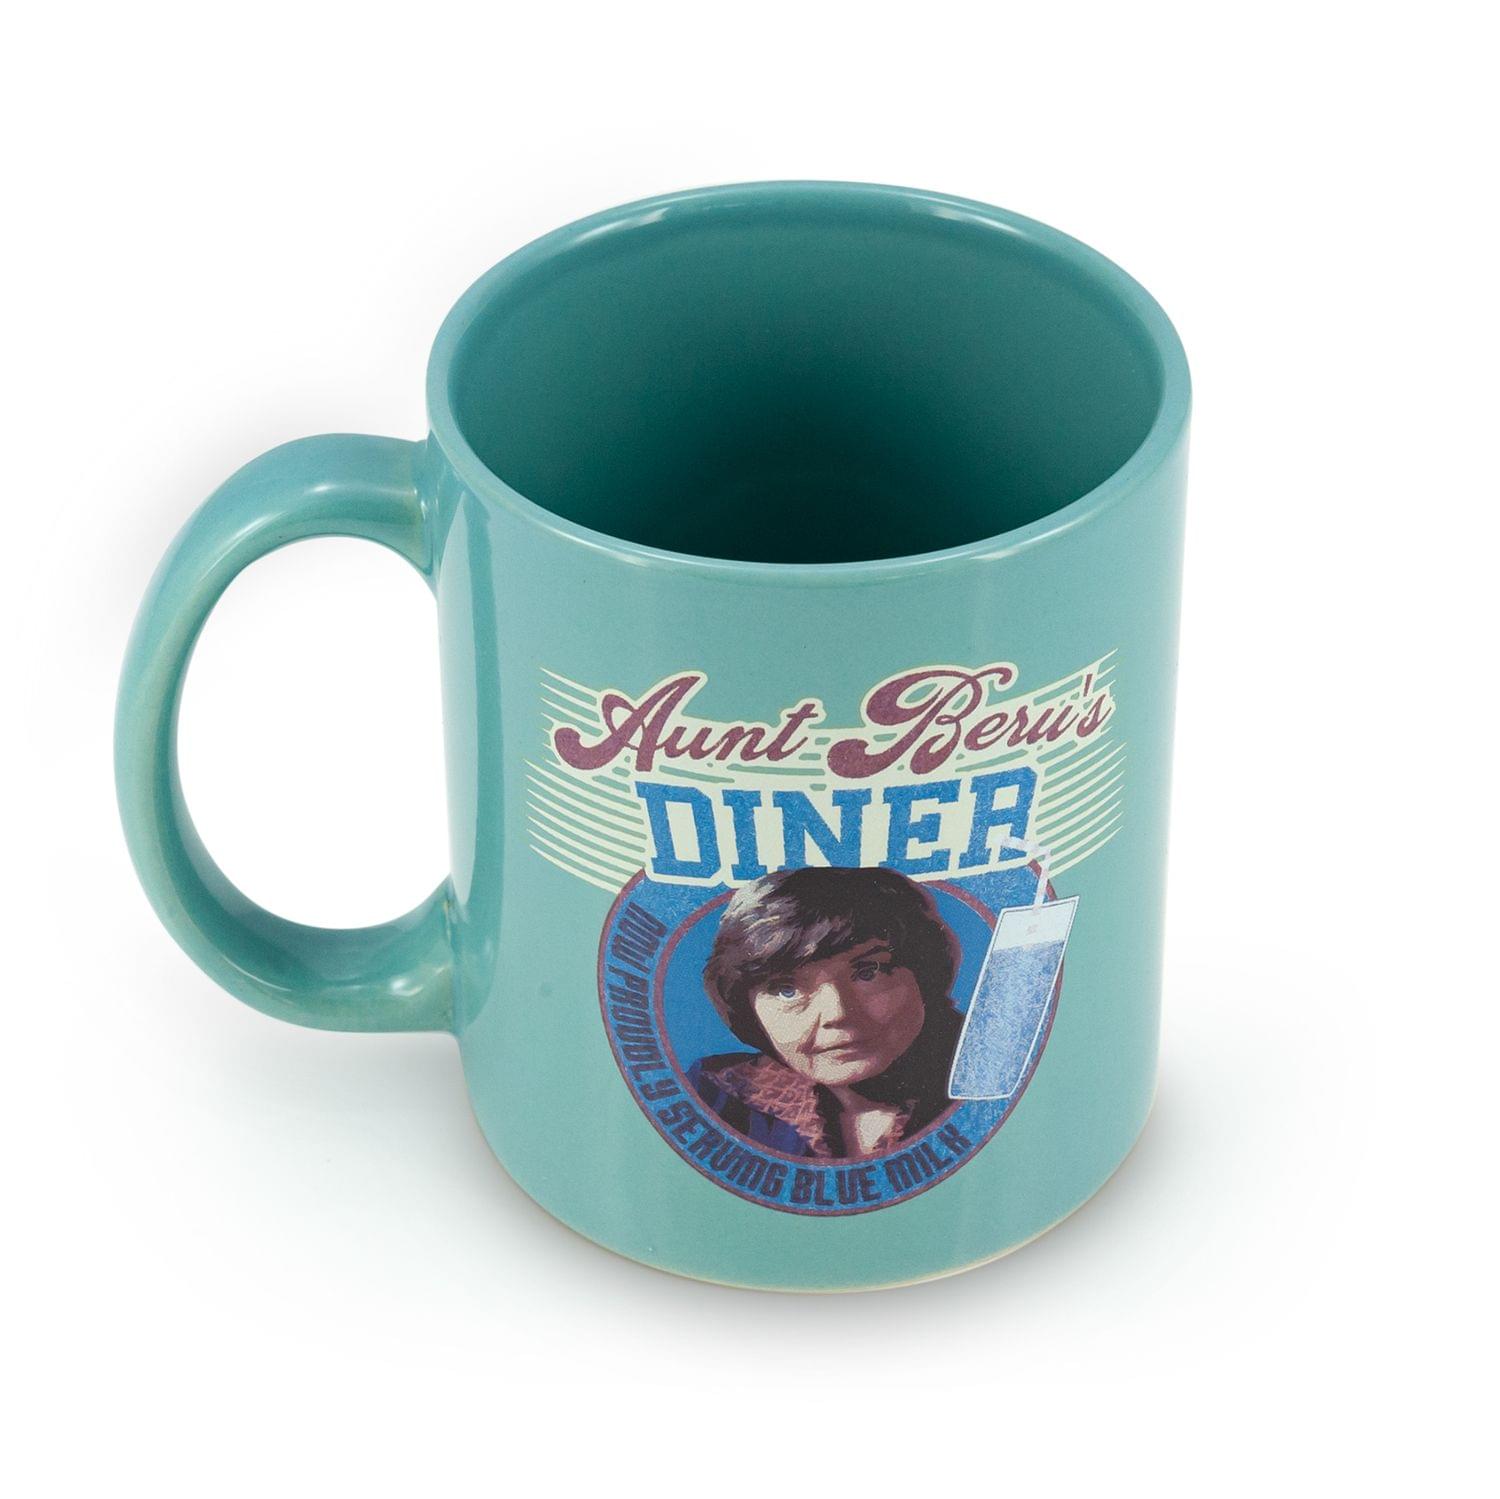 Star Wars Aunt Beru Coffee Mug |Star Wars Coffee Cup | 11-Ounce Size